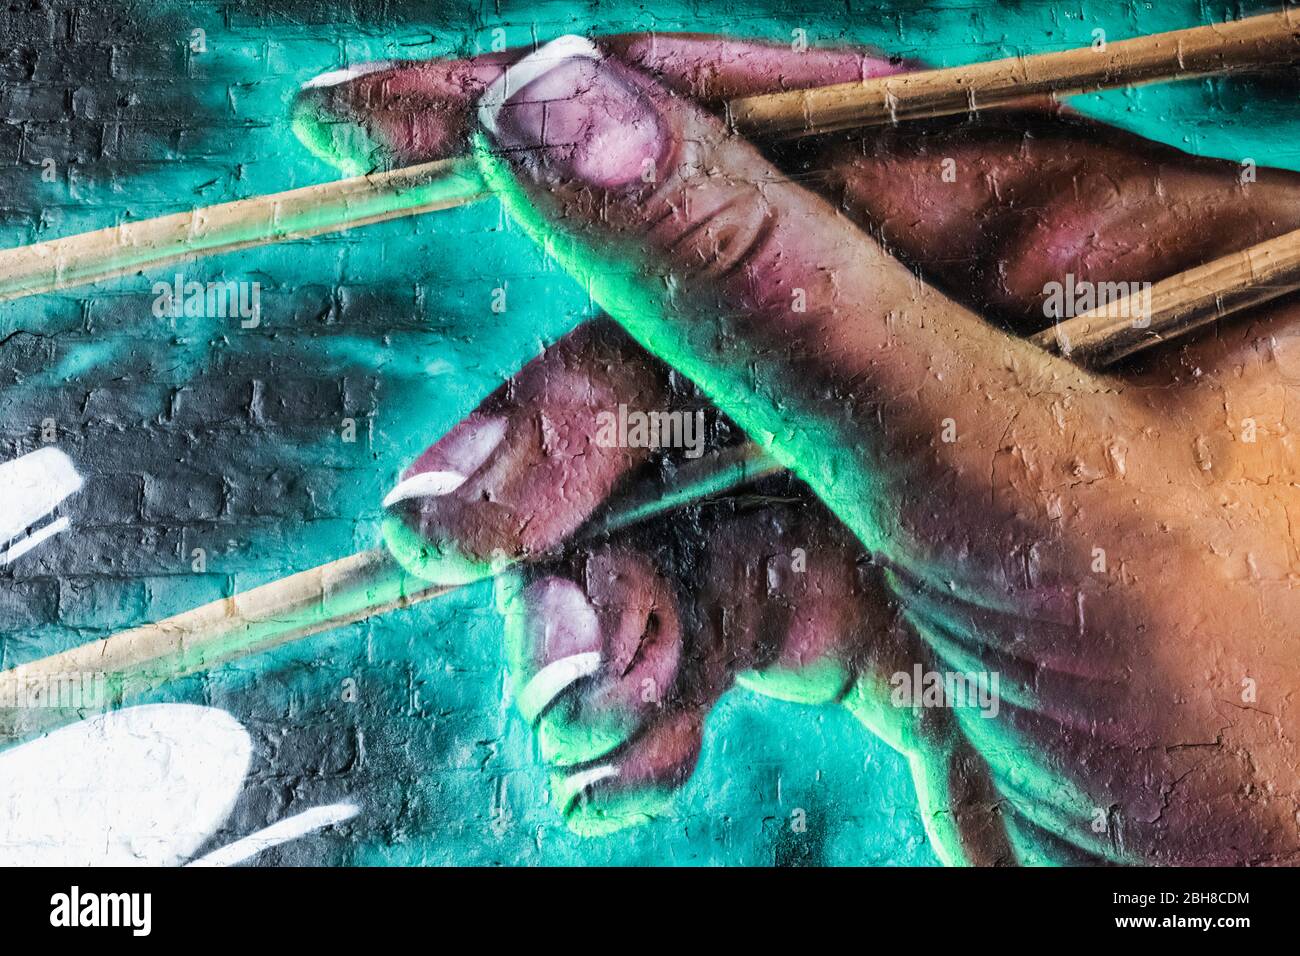 England, London, Southwark, Street Art depicting Hand Holding Chopsticks Stock Photo